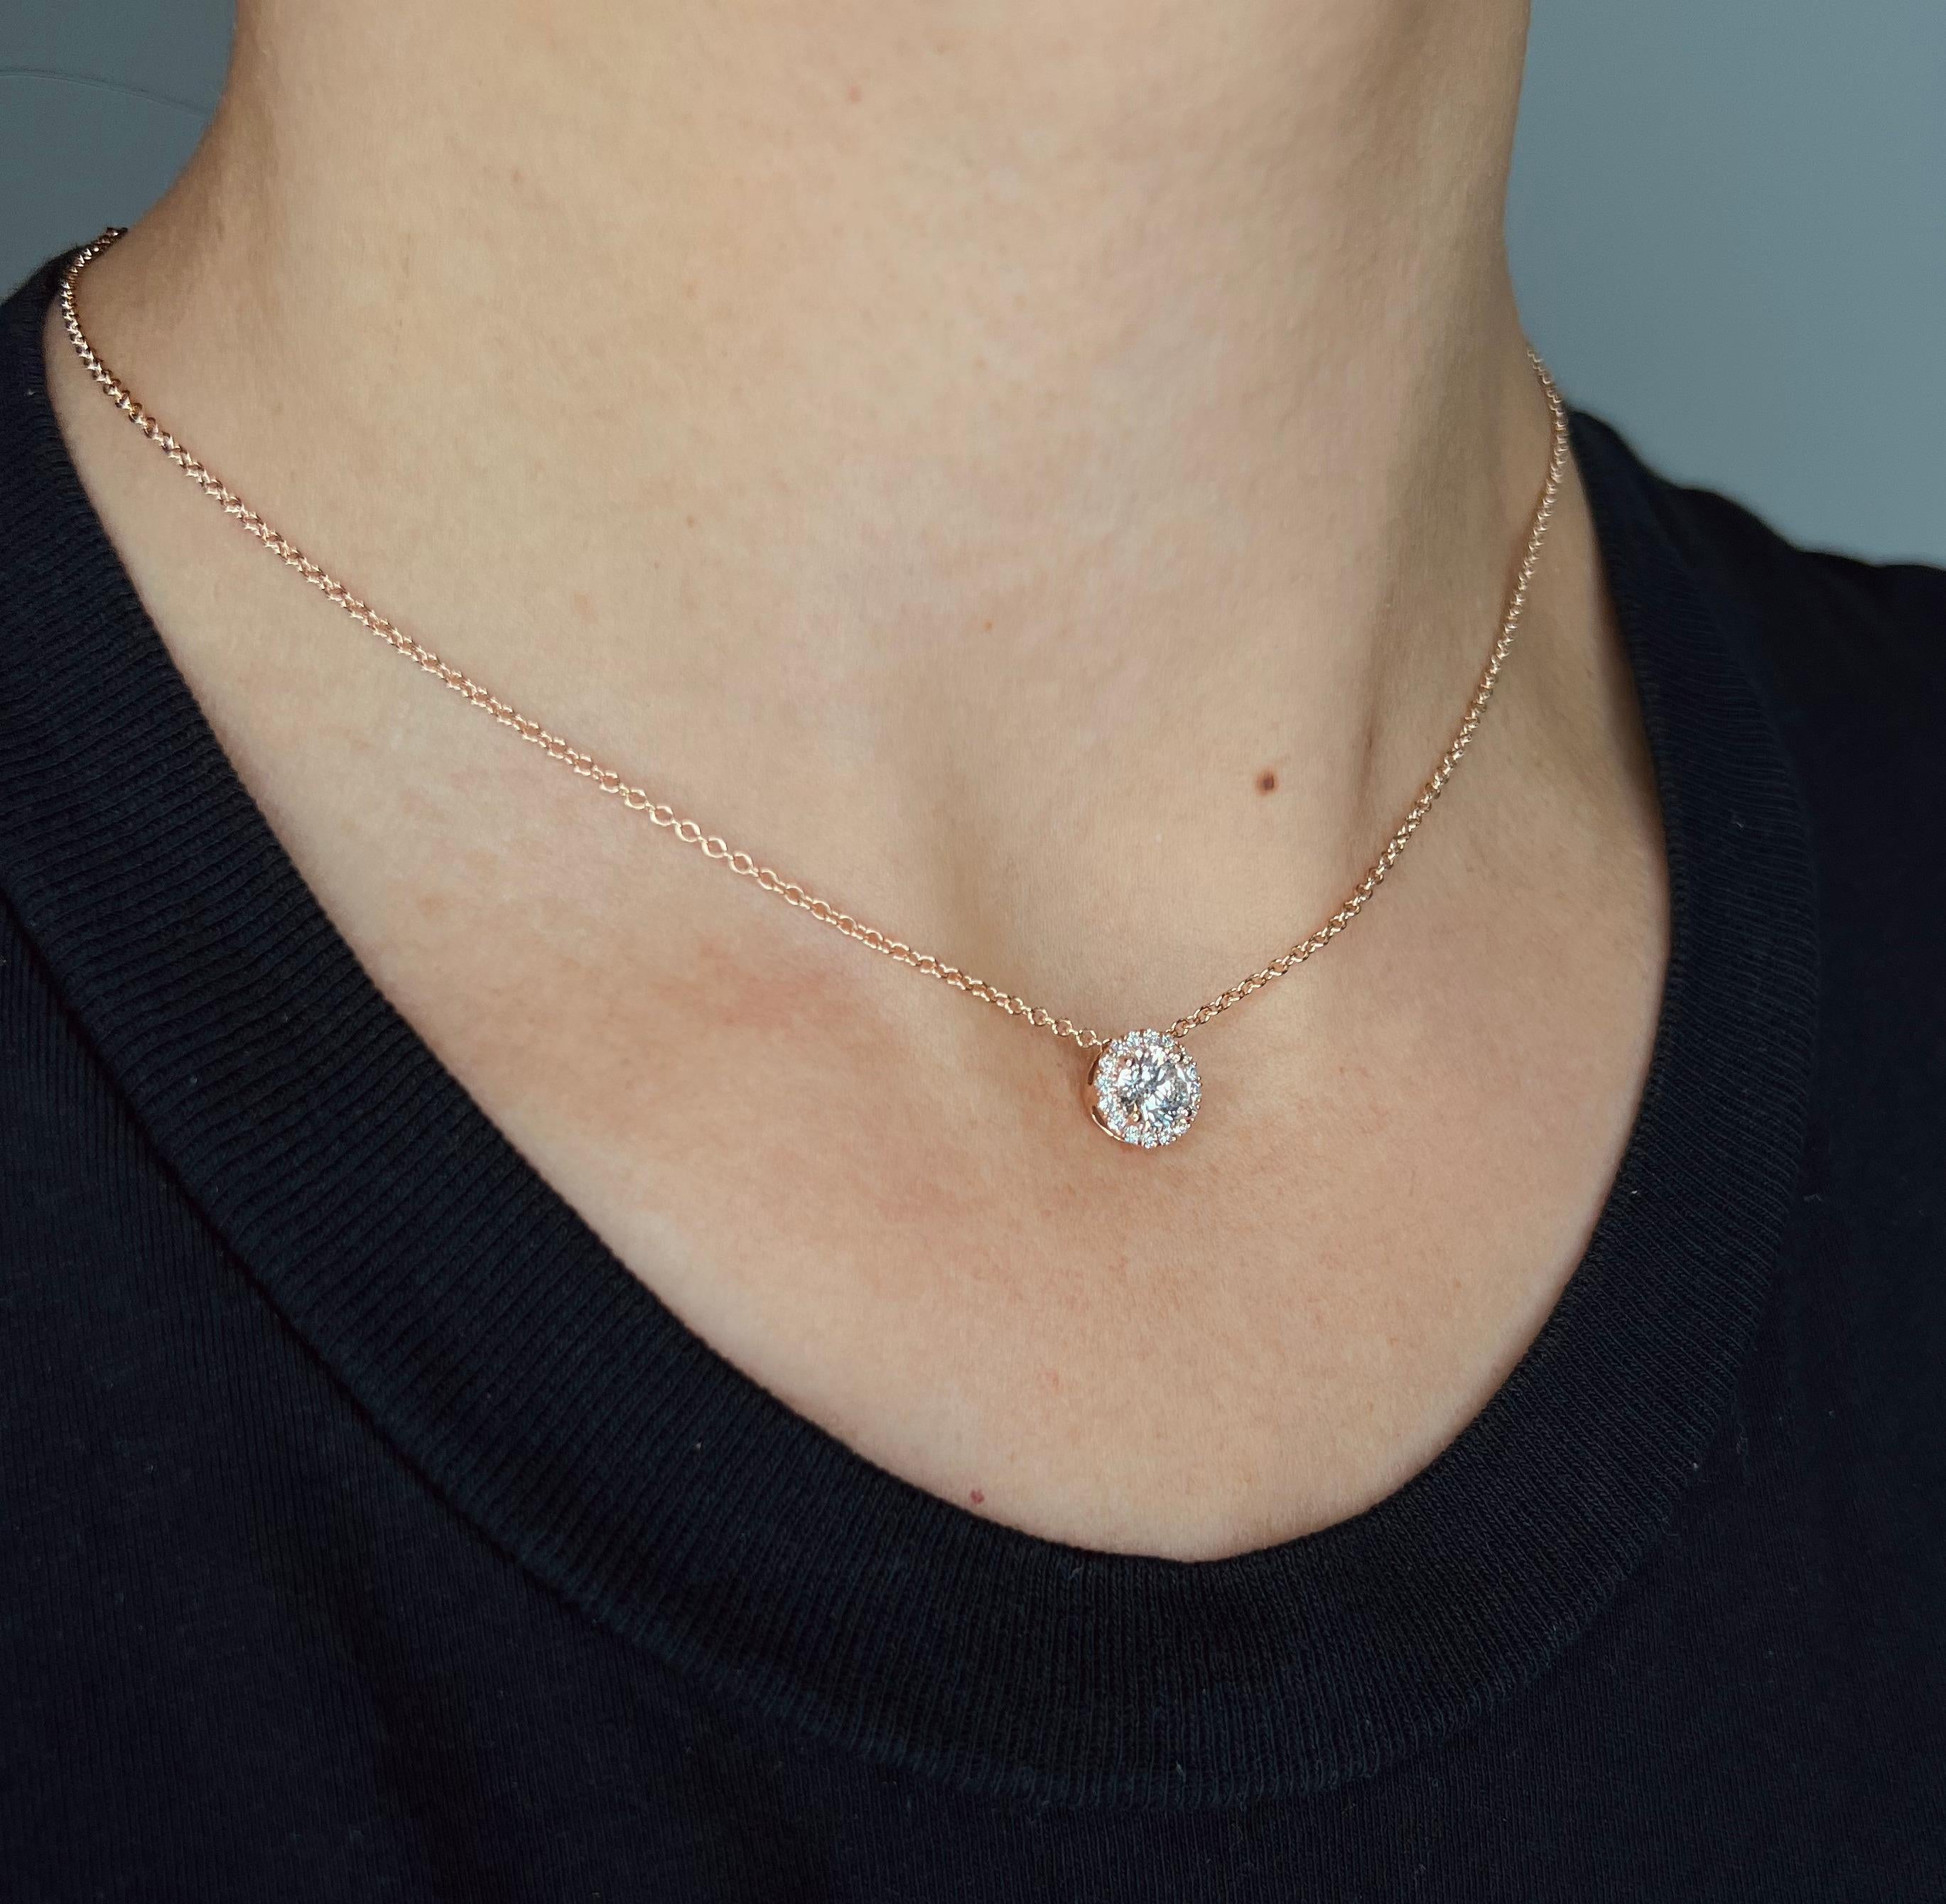 Women's or Men's 14k White Gold 1.10 Carat Round Cut Diamond Solitaire Pendant Necklace For Sale